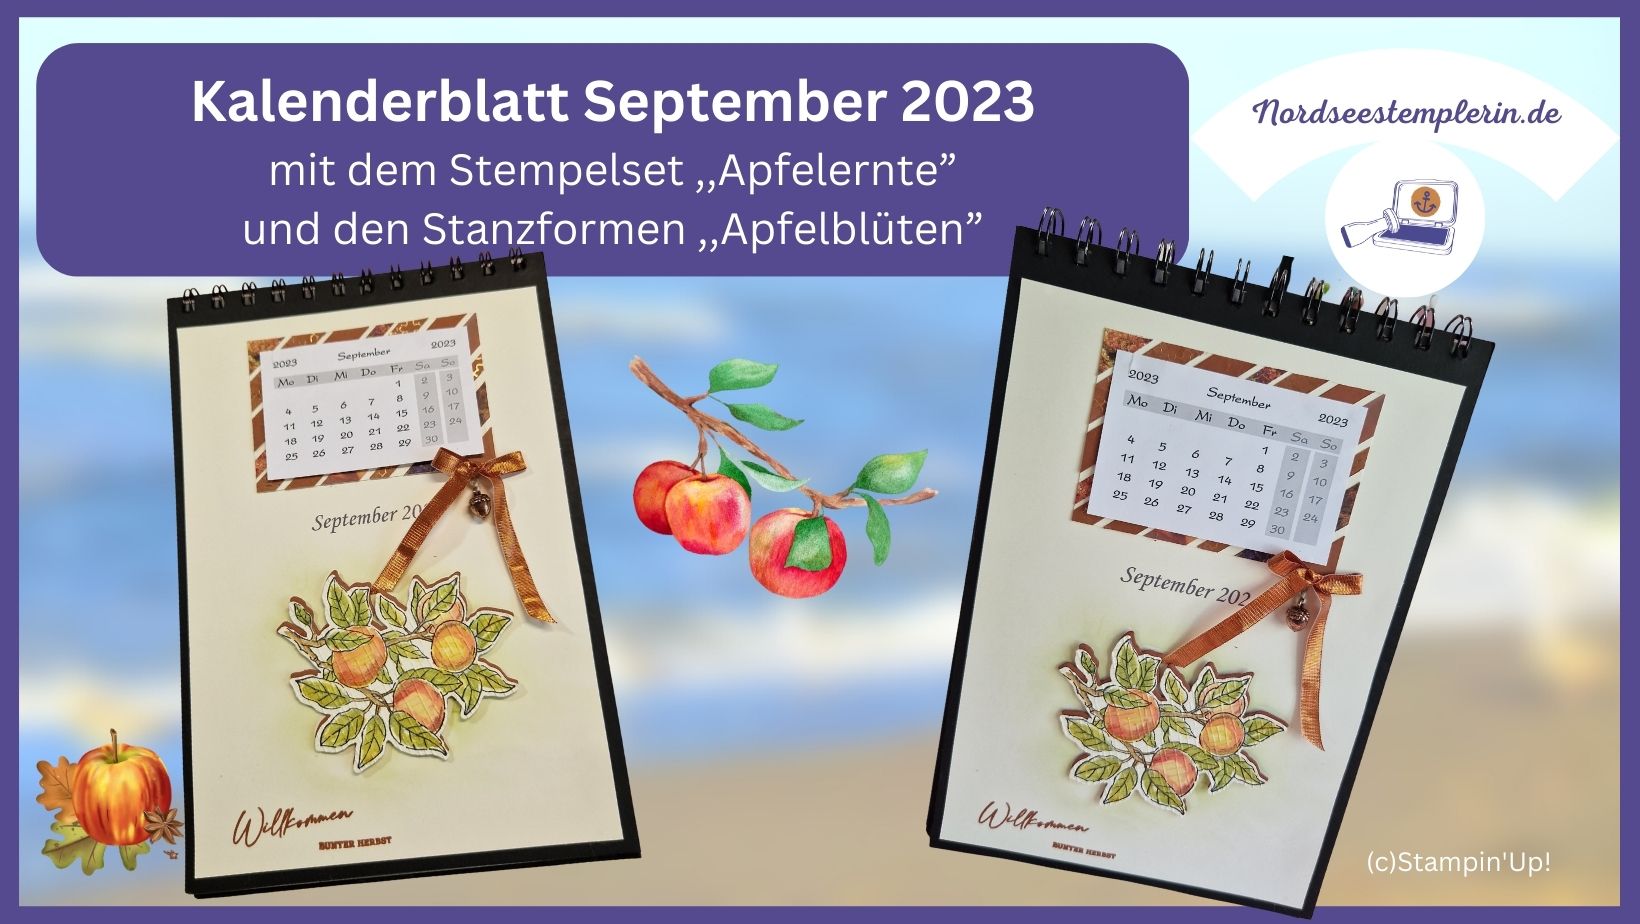 You are currently viewing Anleitung – Kalenderblatt September 2023 – mit Stampin’Up! Produkte „Apfelernte“